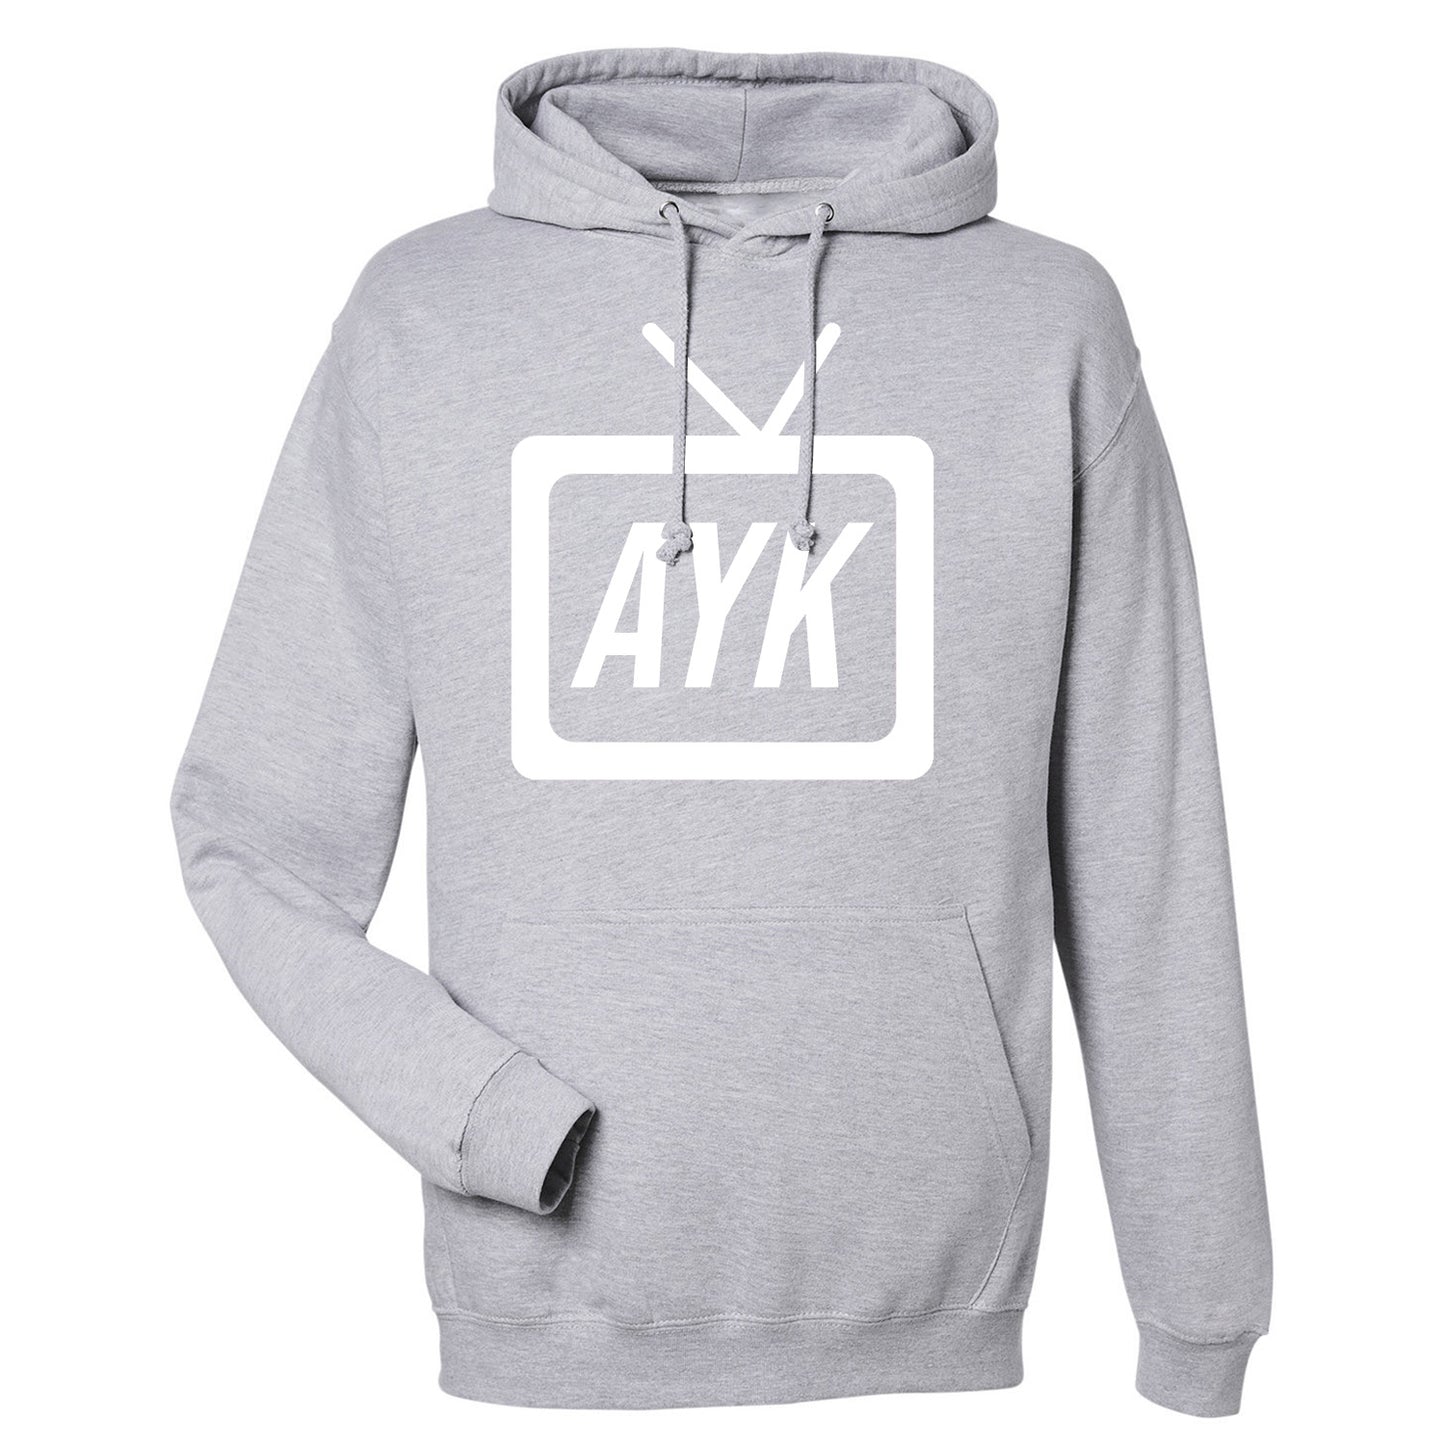 TV AYK Logo - Hoodie